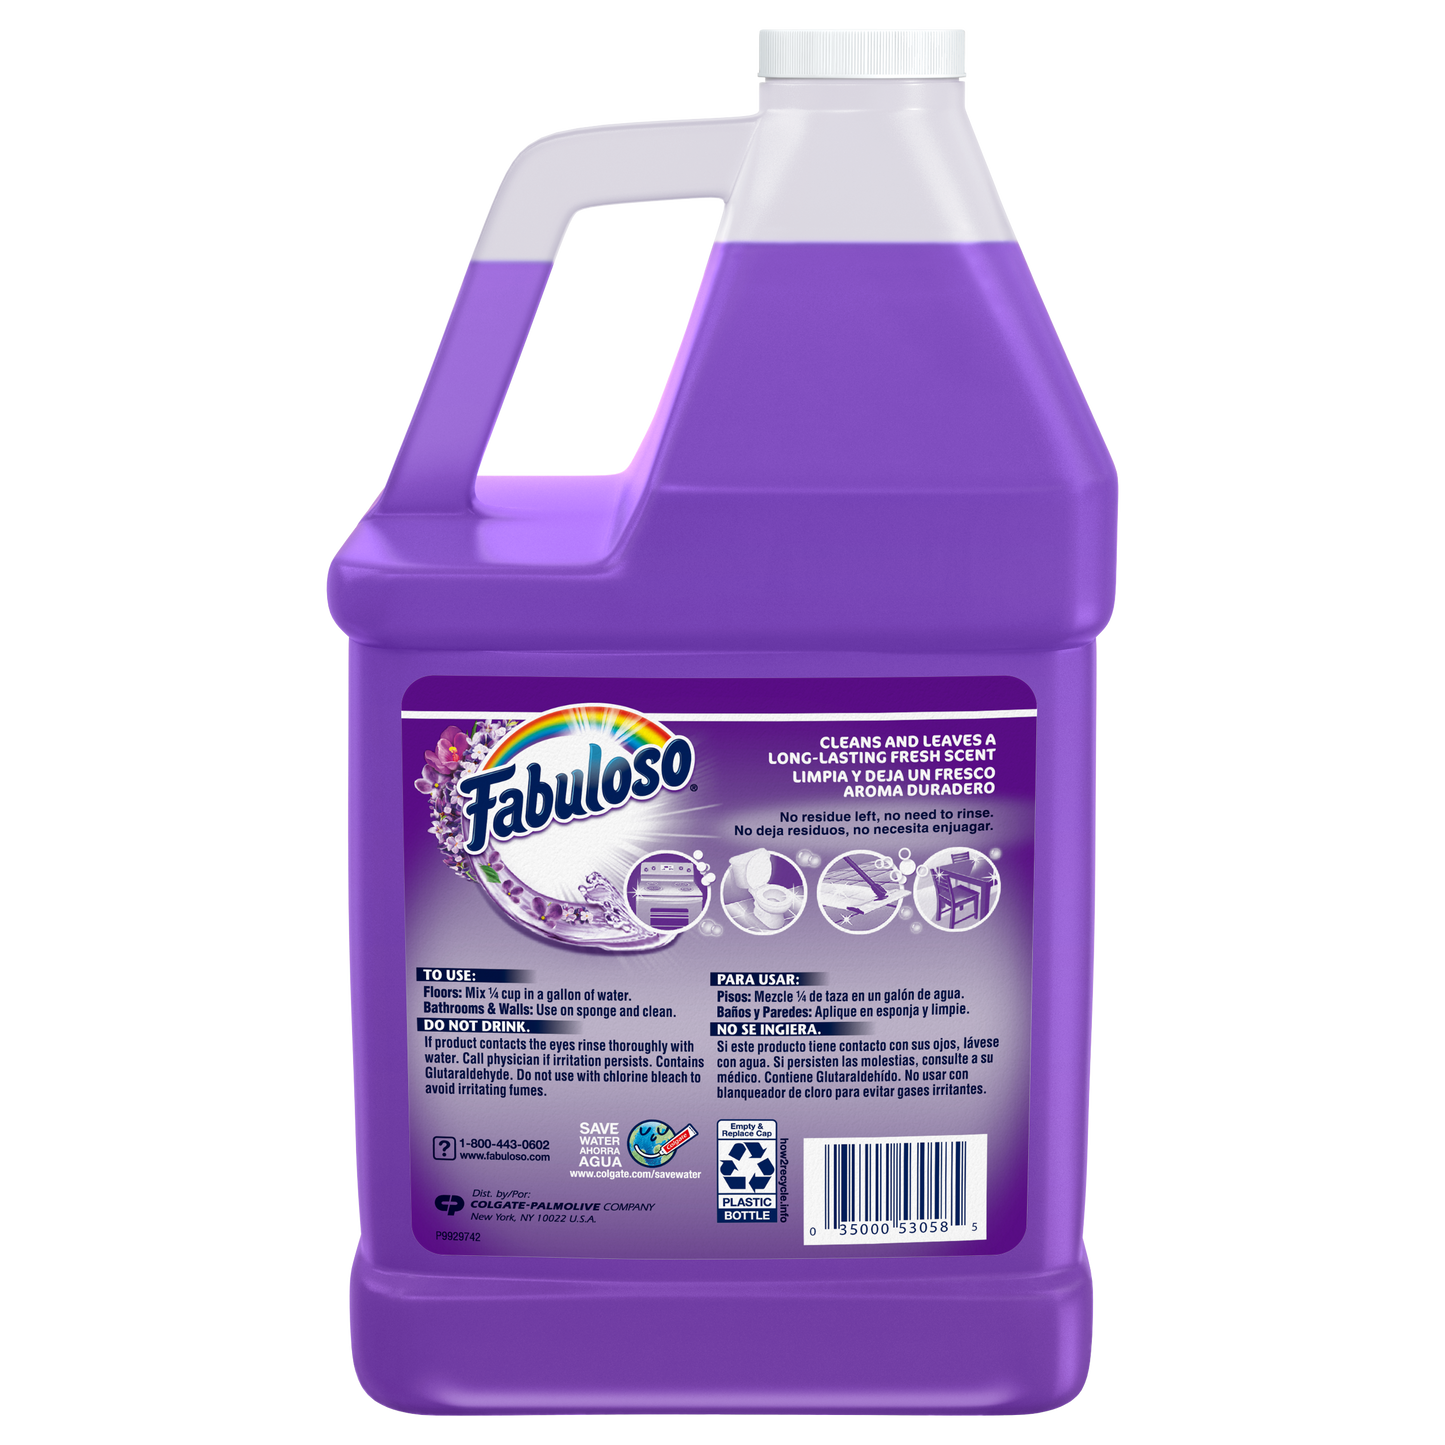 Fabuloso All Purpose Cleaner, Lavender - 128 fluid oz